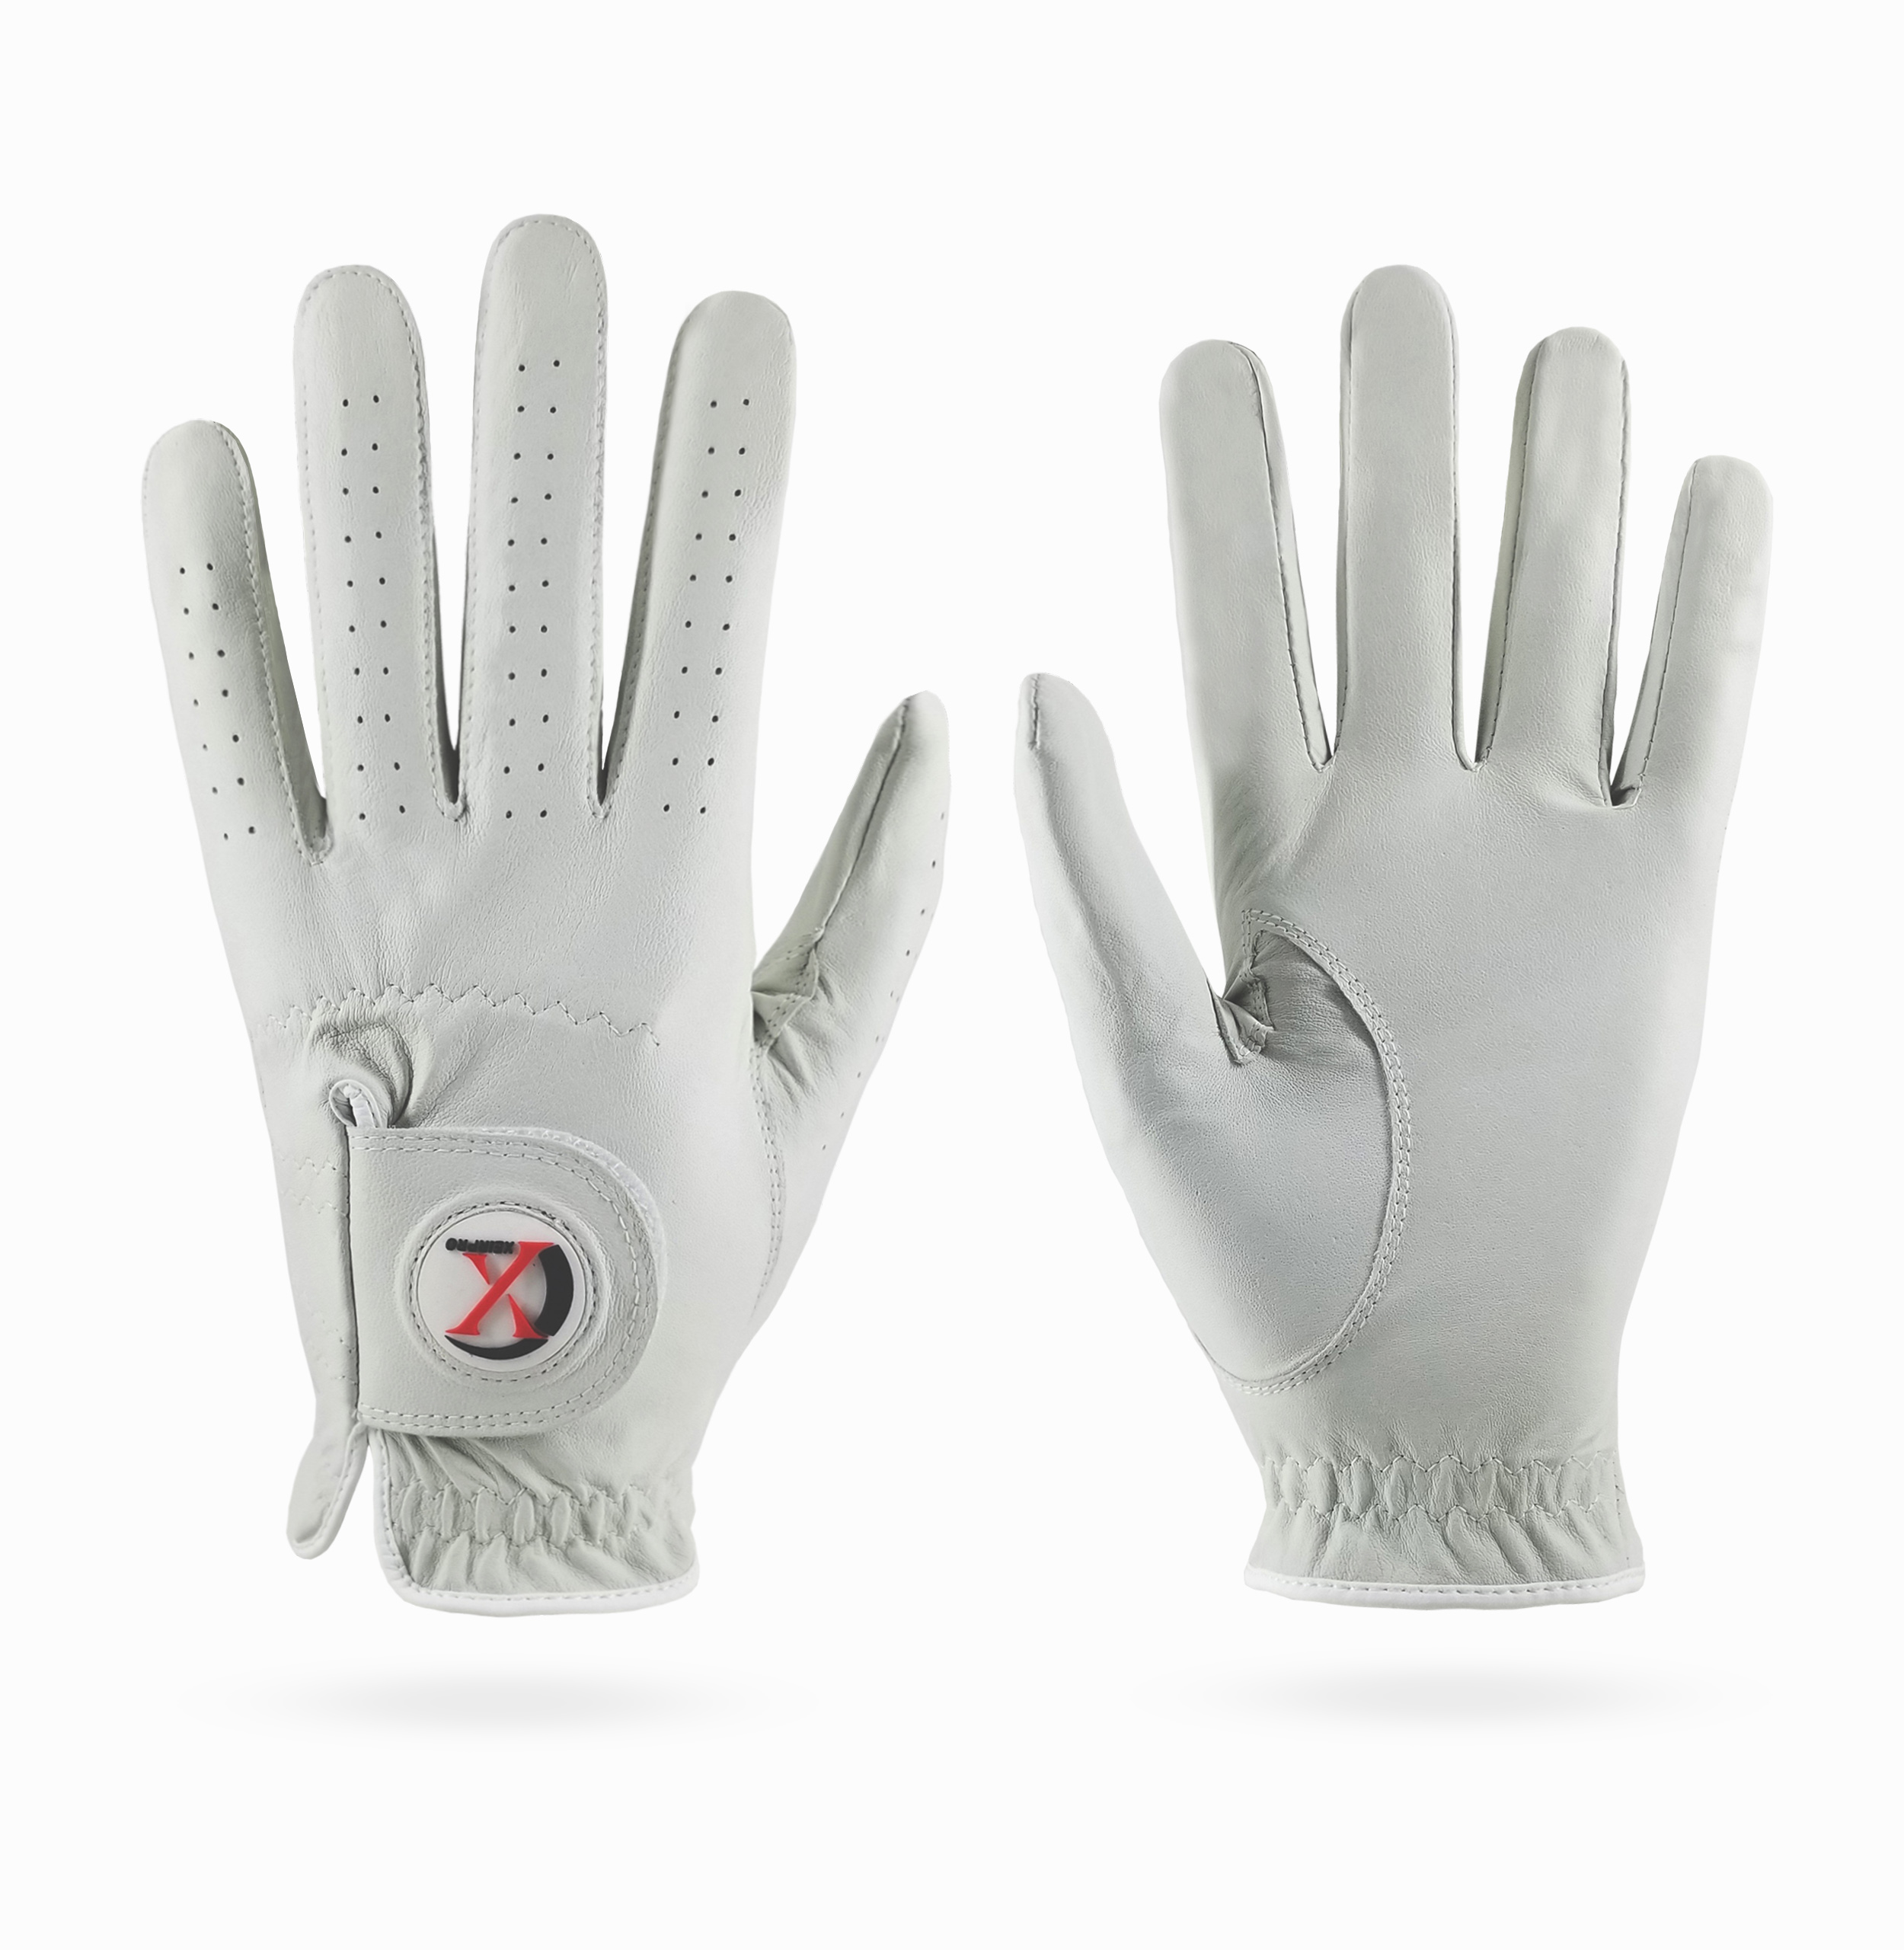 Xeirpro glove with Pearl white kangaroo leather (Web)